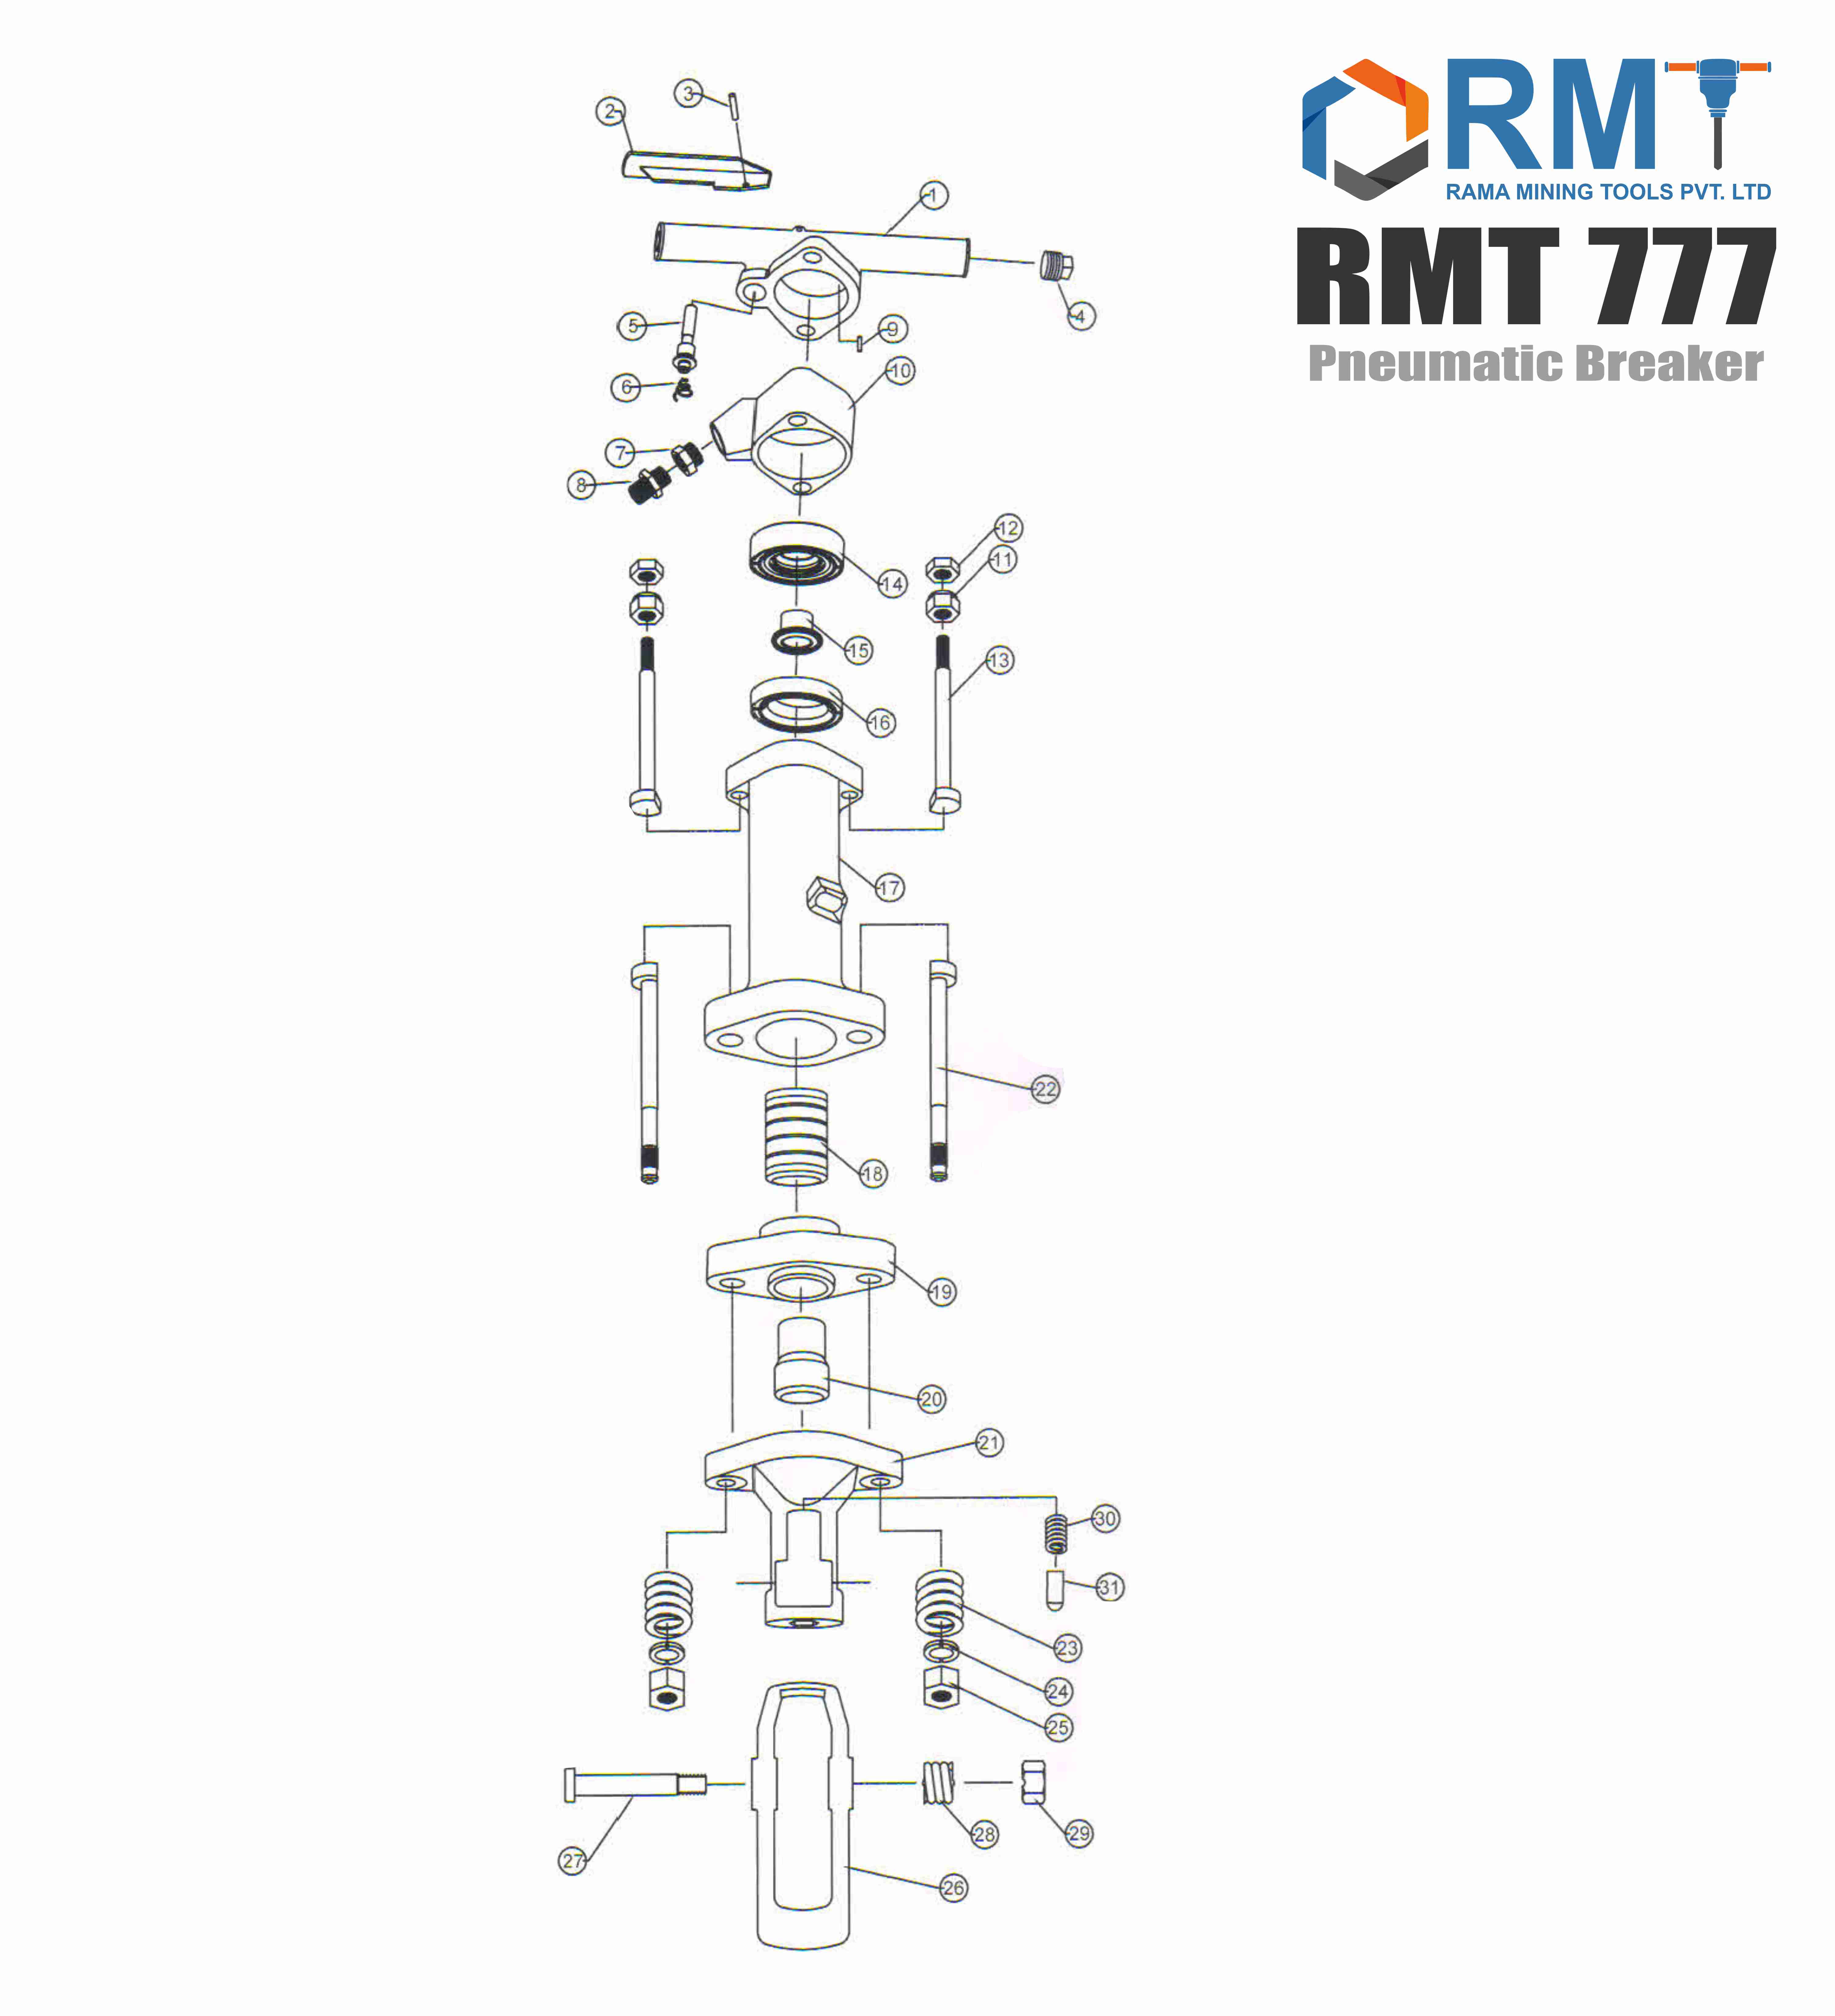 RMT 777 - Pneumatic Breaker